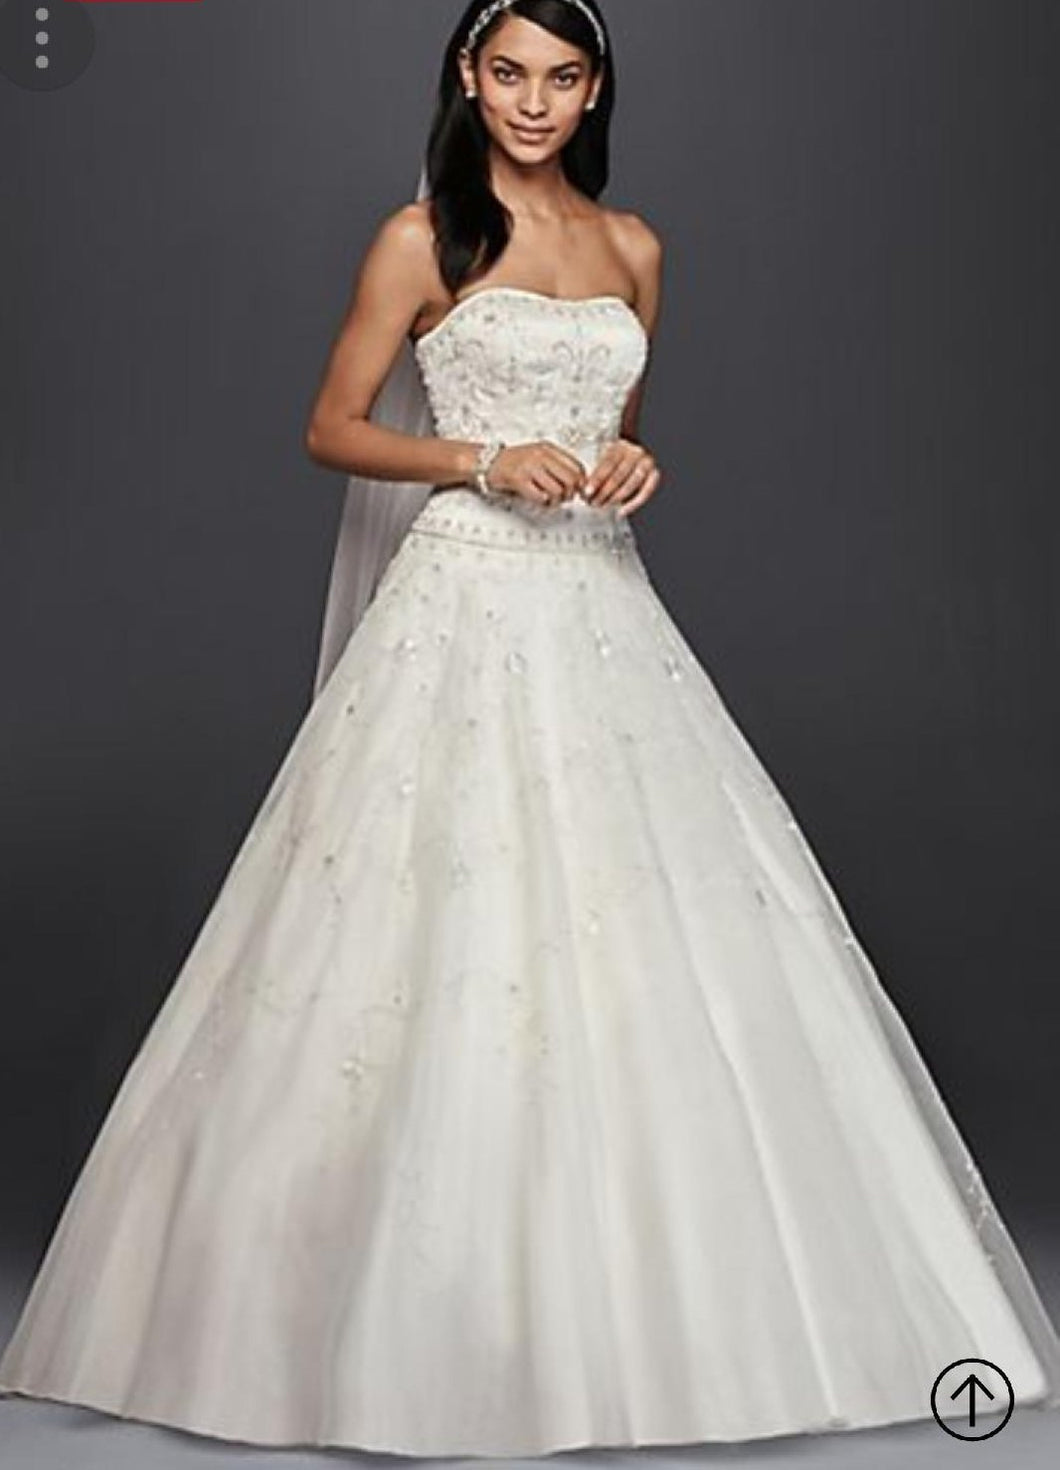 Oleg Cassini 'Satin Bodice Organza' size 10 new wedding dress front view on model